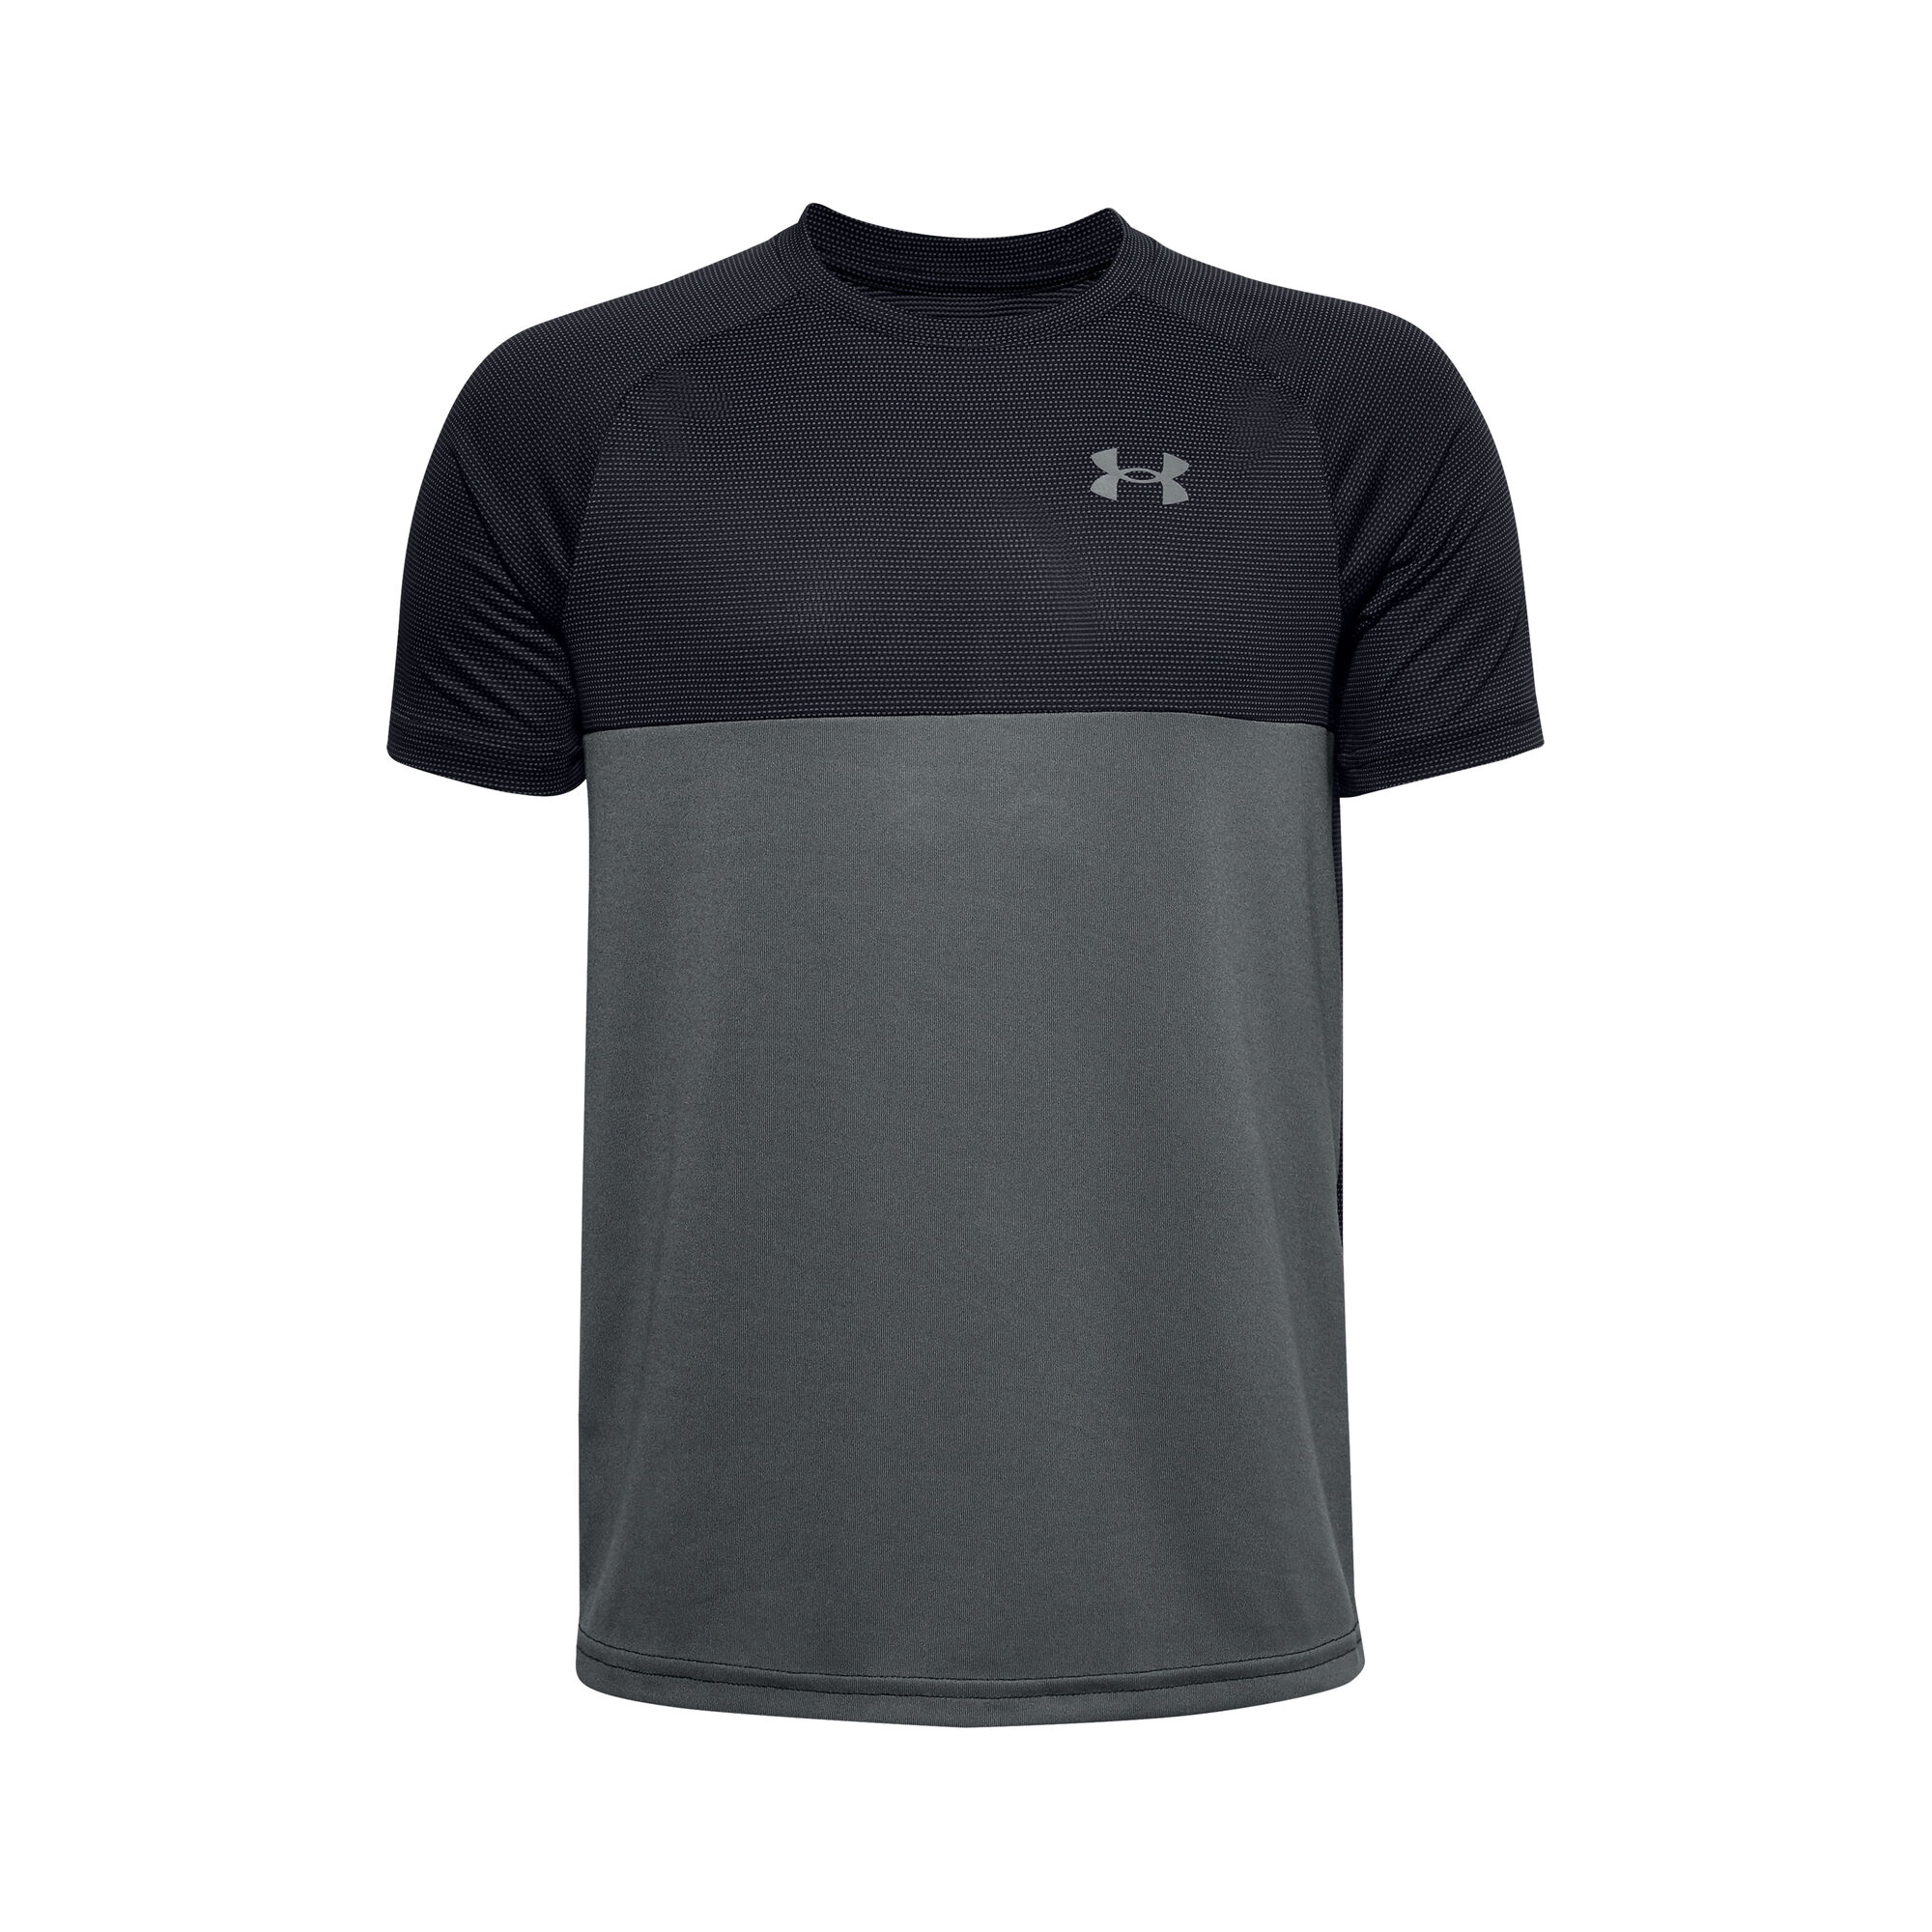 buy Under Armour Tech Colorblock T-Shirt Boys - Black, Dark Grey online ...